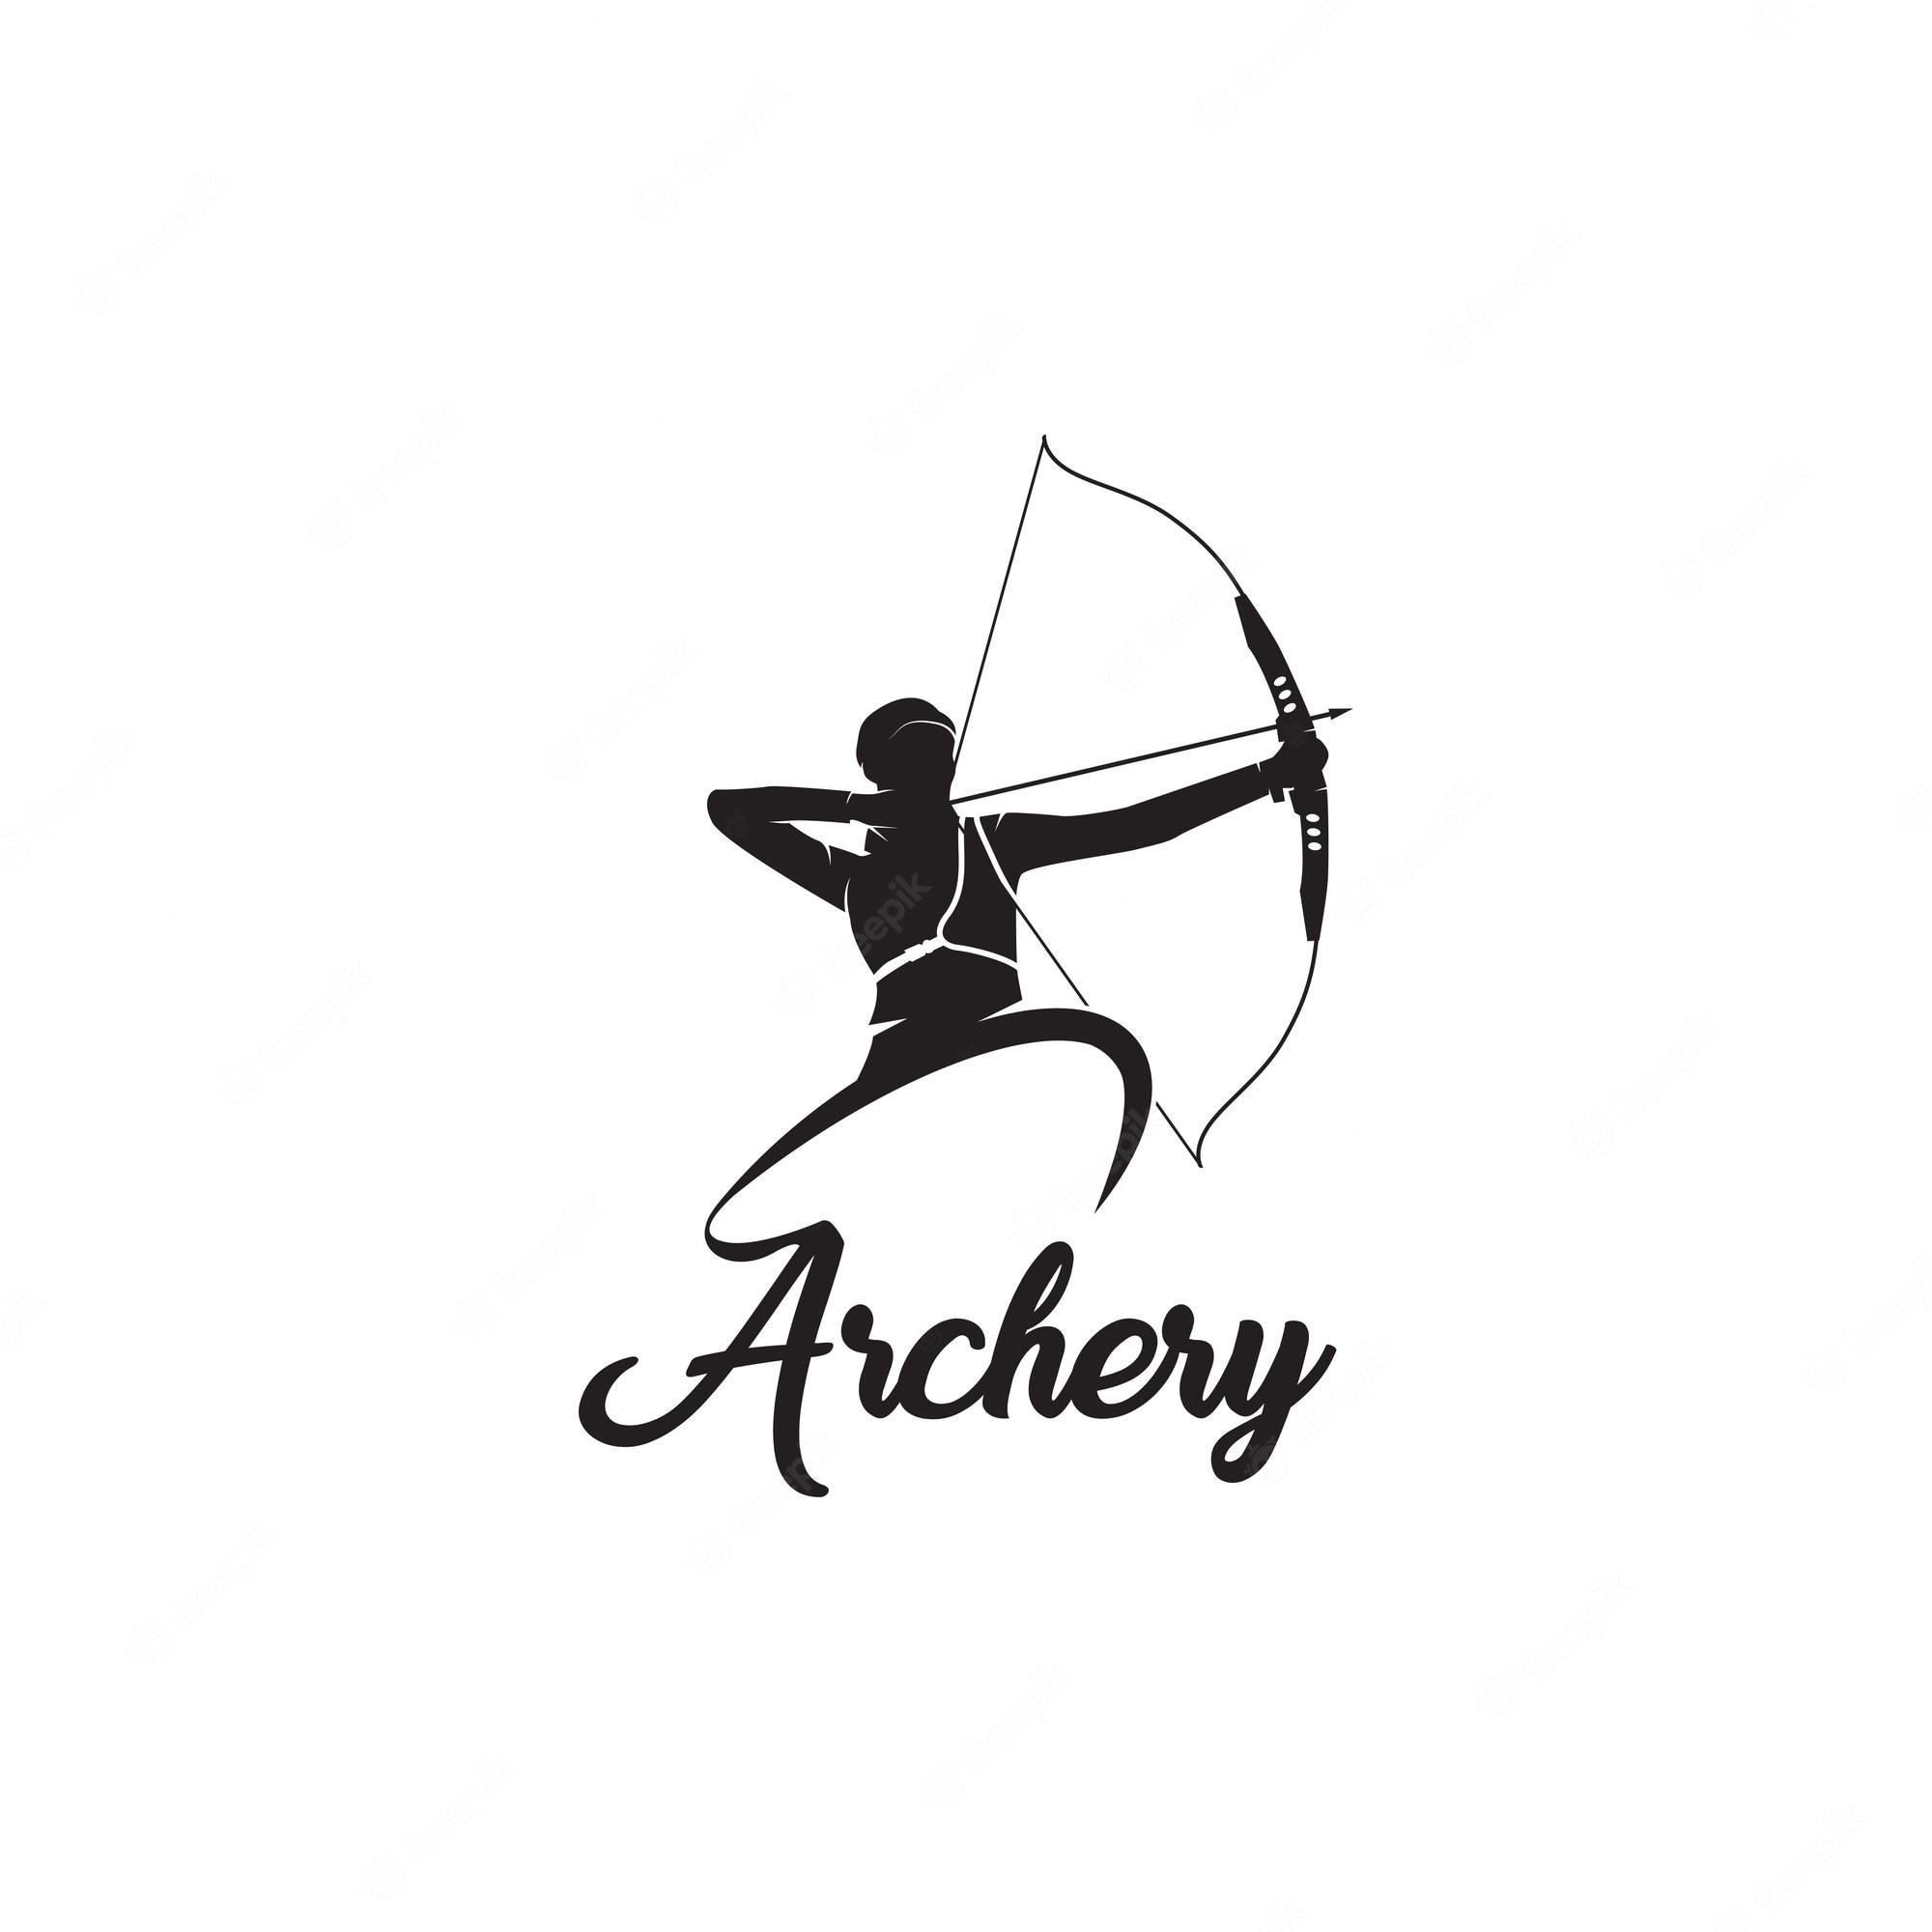 Archer Silhouette Image